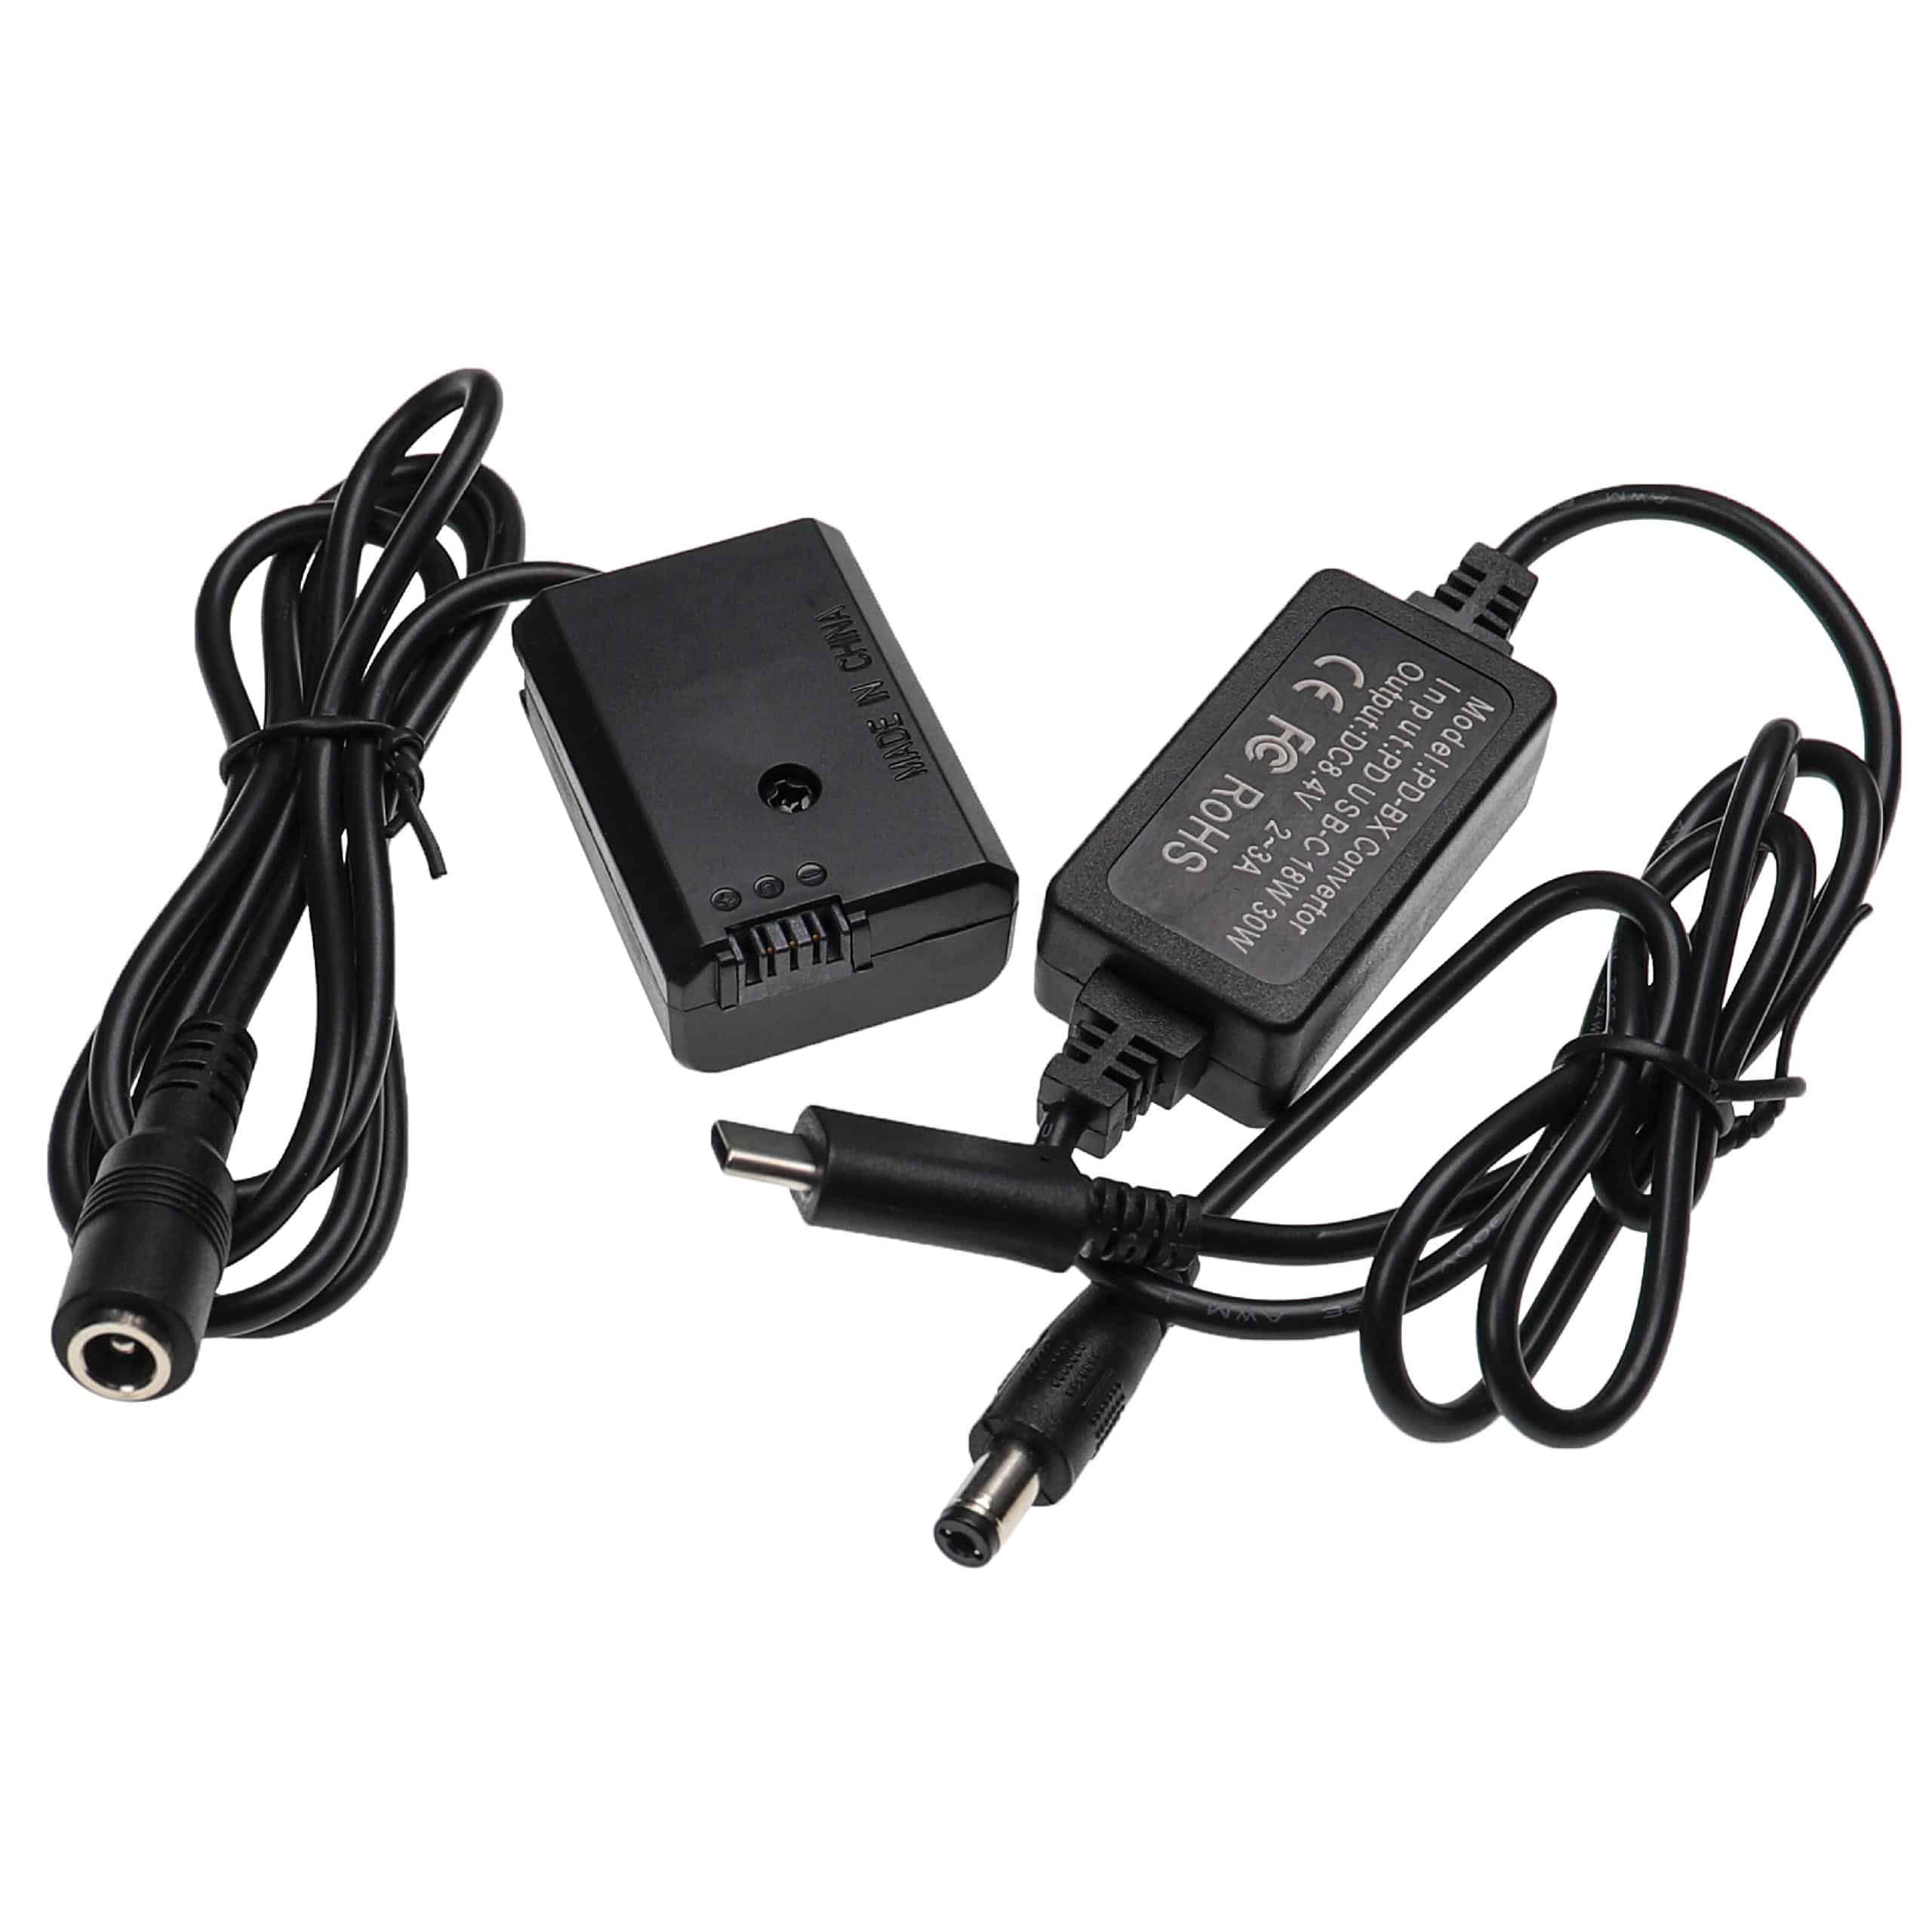 Fuente alimentación USB reemplaza Sony AC-PW20 para cámaras + acoplador CC reemplaza Sony NP-FW50